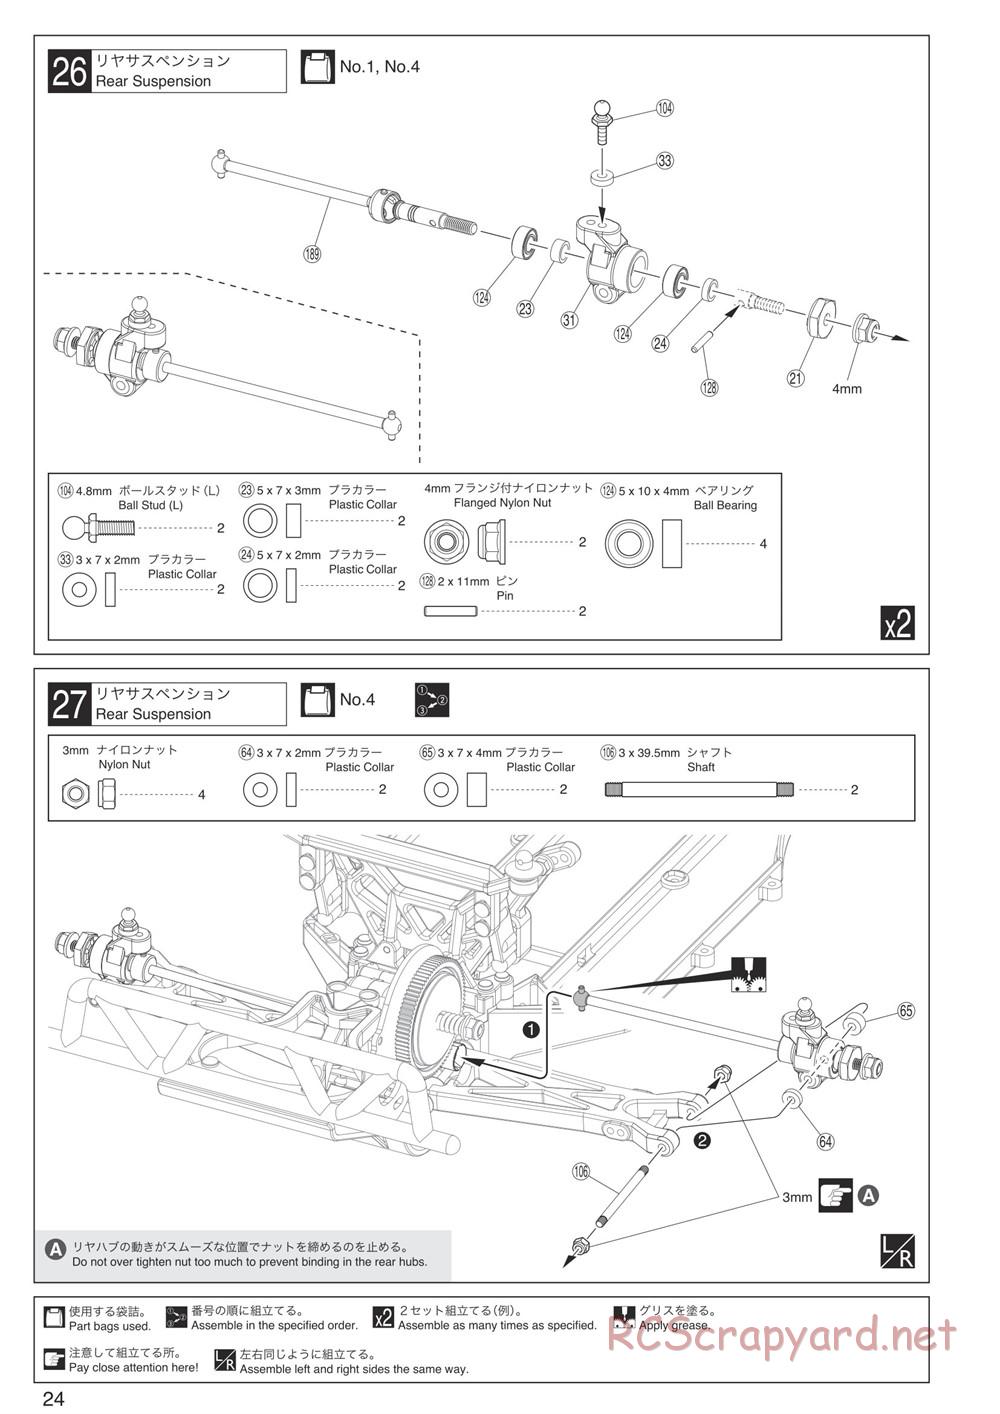 Kyosho - Ultima SCR - Manual - Page 24